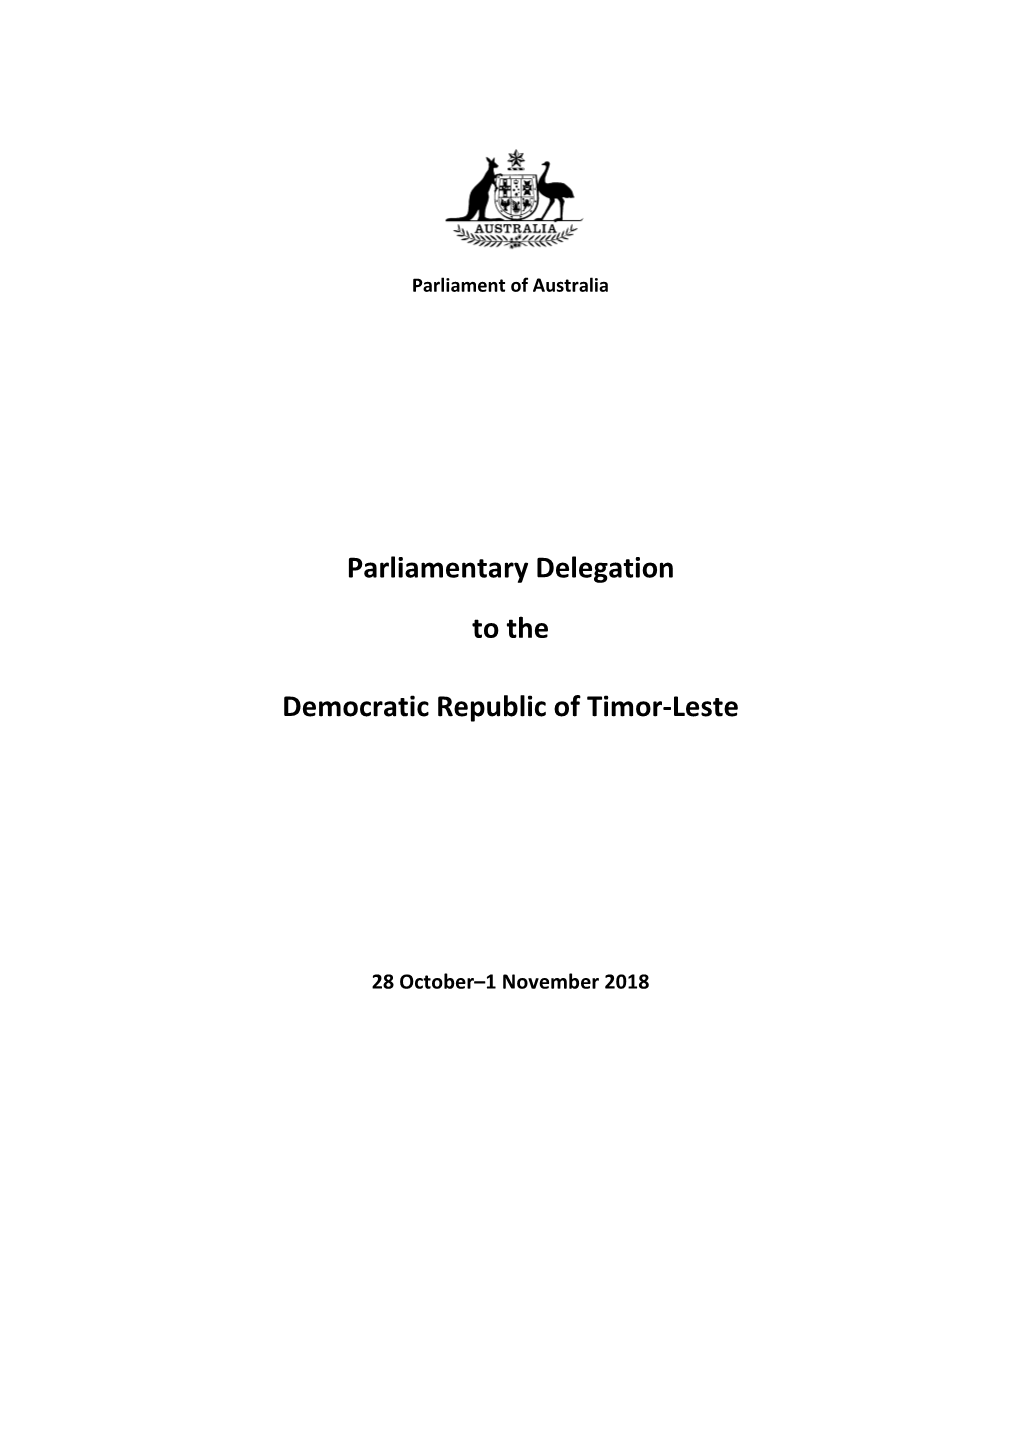 Parliamentary Delegation to the Democratic Republic of Timor-Leste